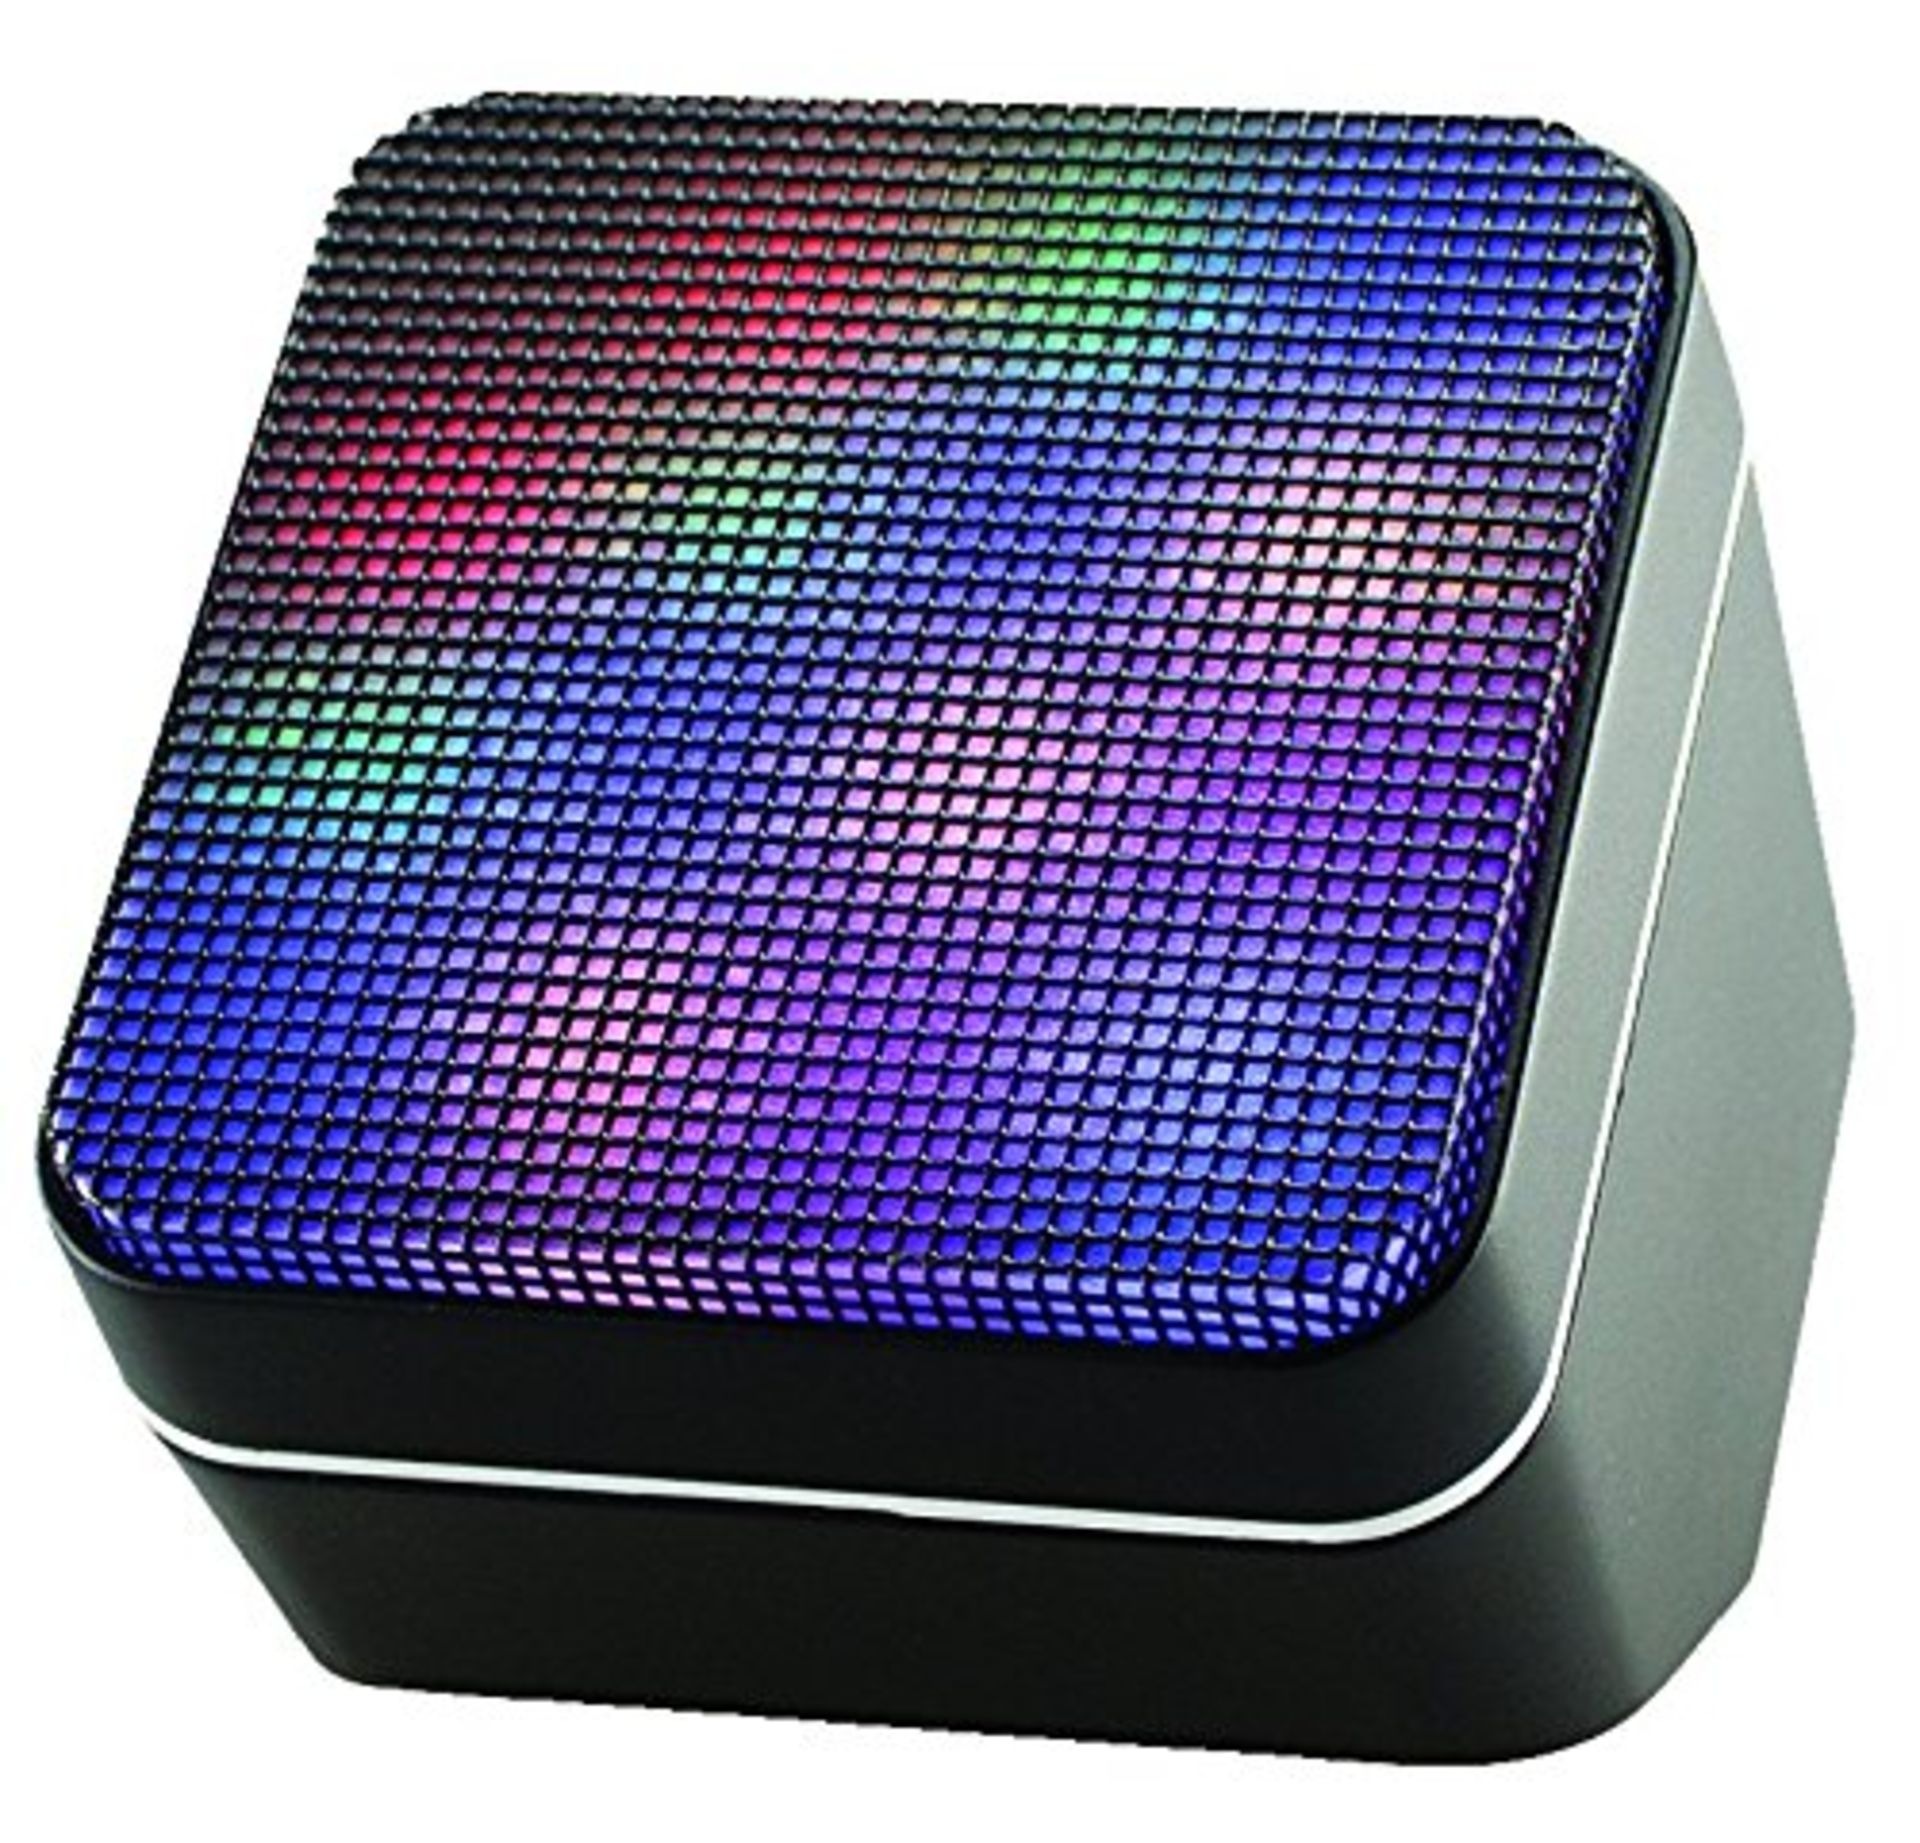 V *TRADE QTY* Brand New LED Bluetooth Wireless Speaker - High Quality Sound - 3.5mm AUX Input - 6